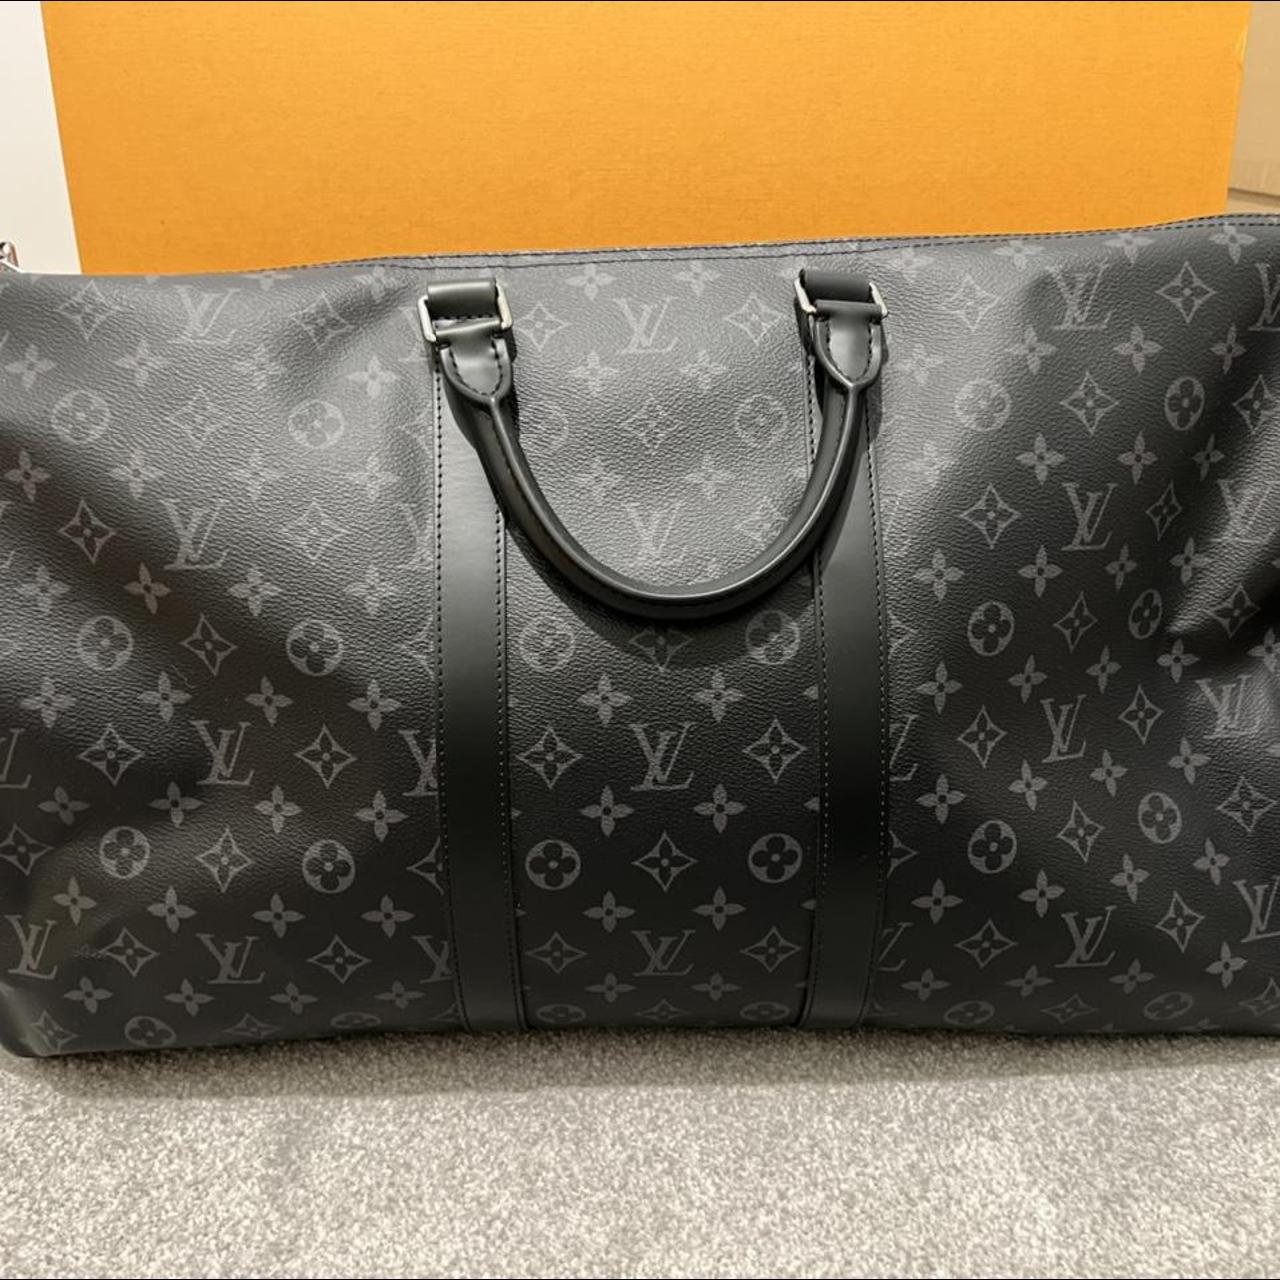 louis vuittons brand new authentic handbags